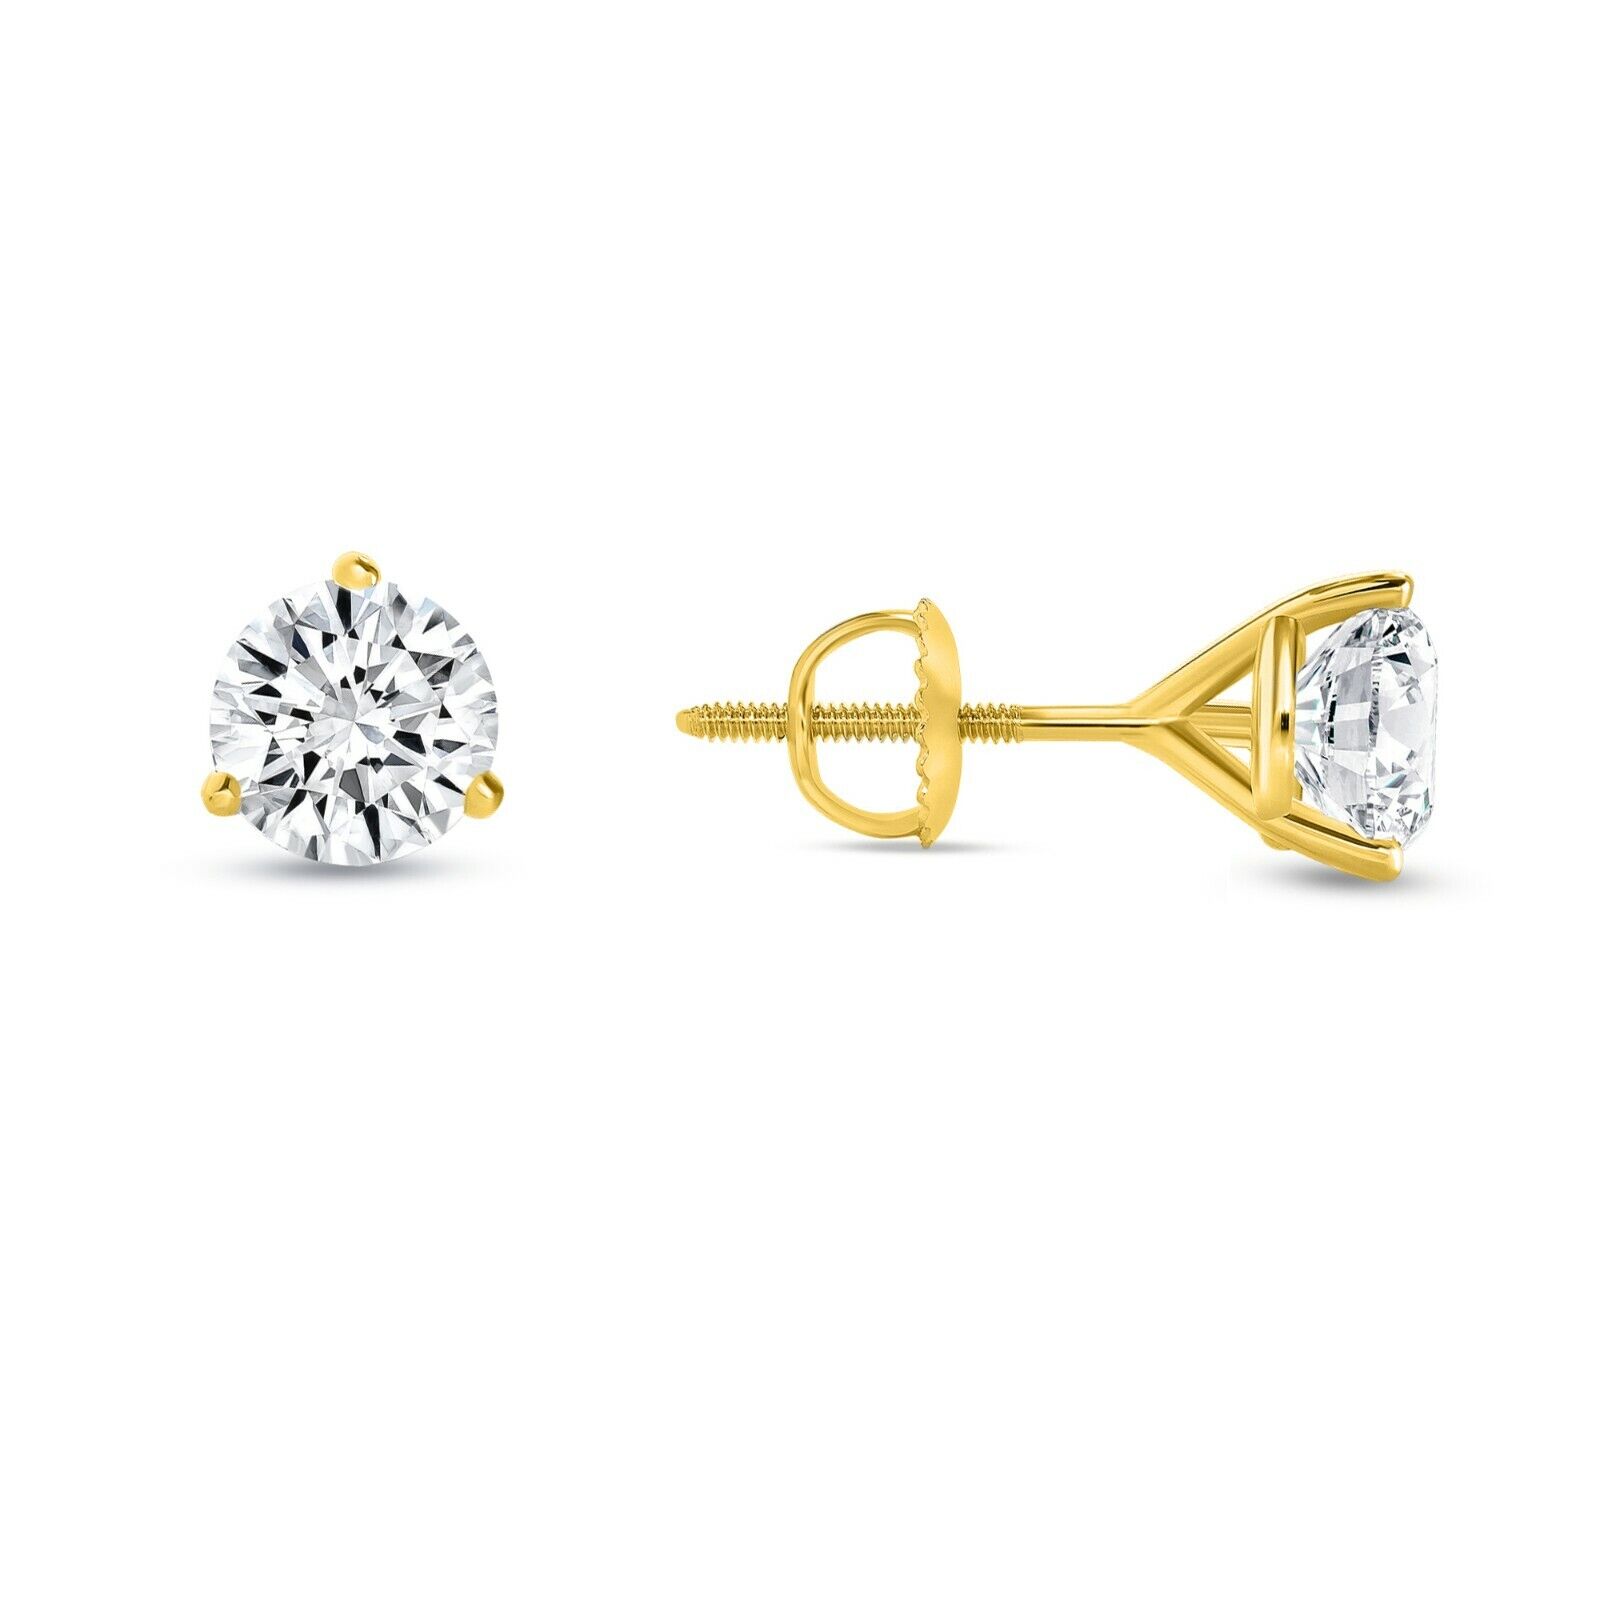 4 Ct Round Real 18K Yellow Gold Simulate Diamond Earrings Studs Basket ScrewBack